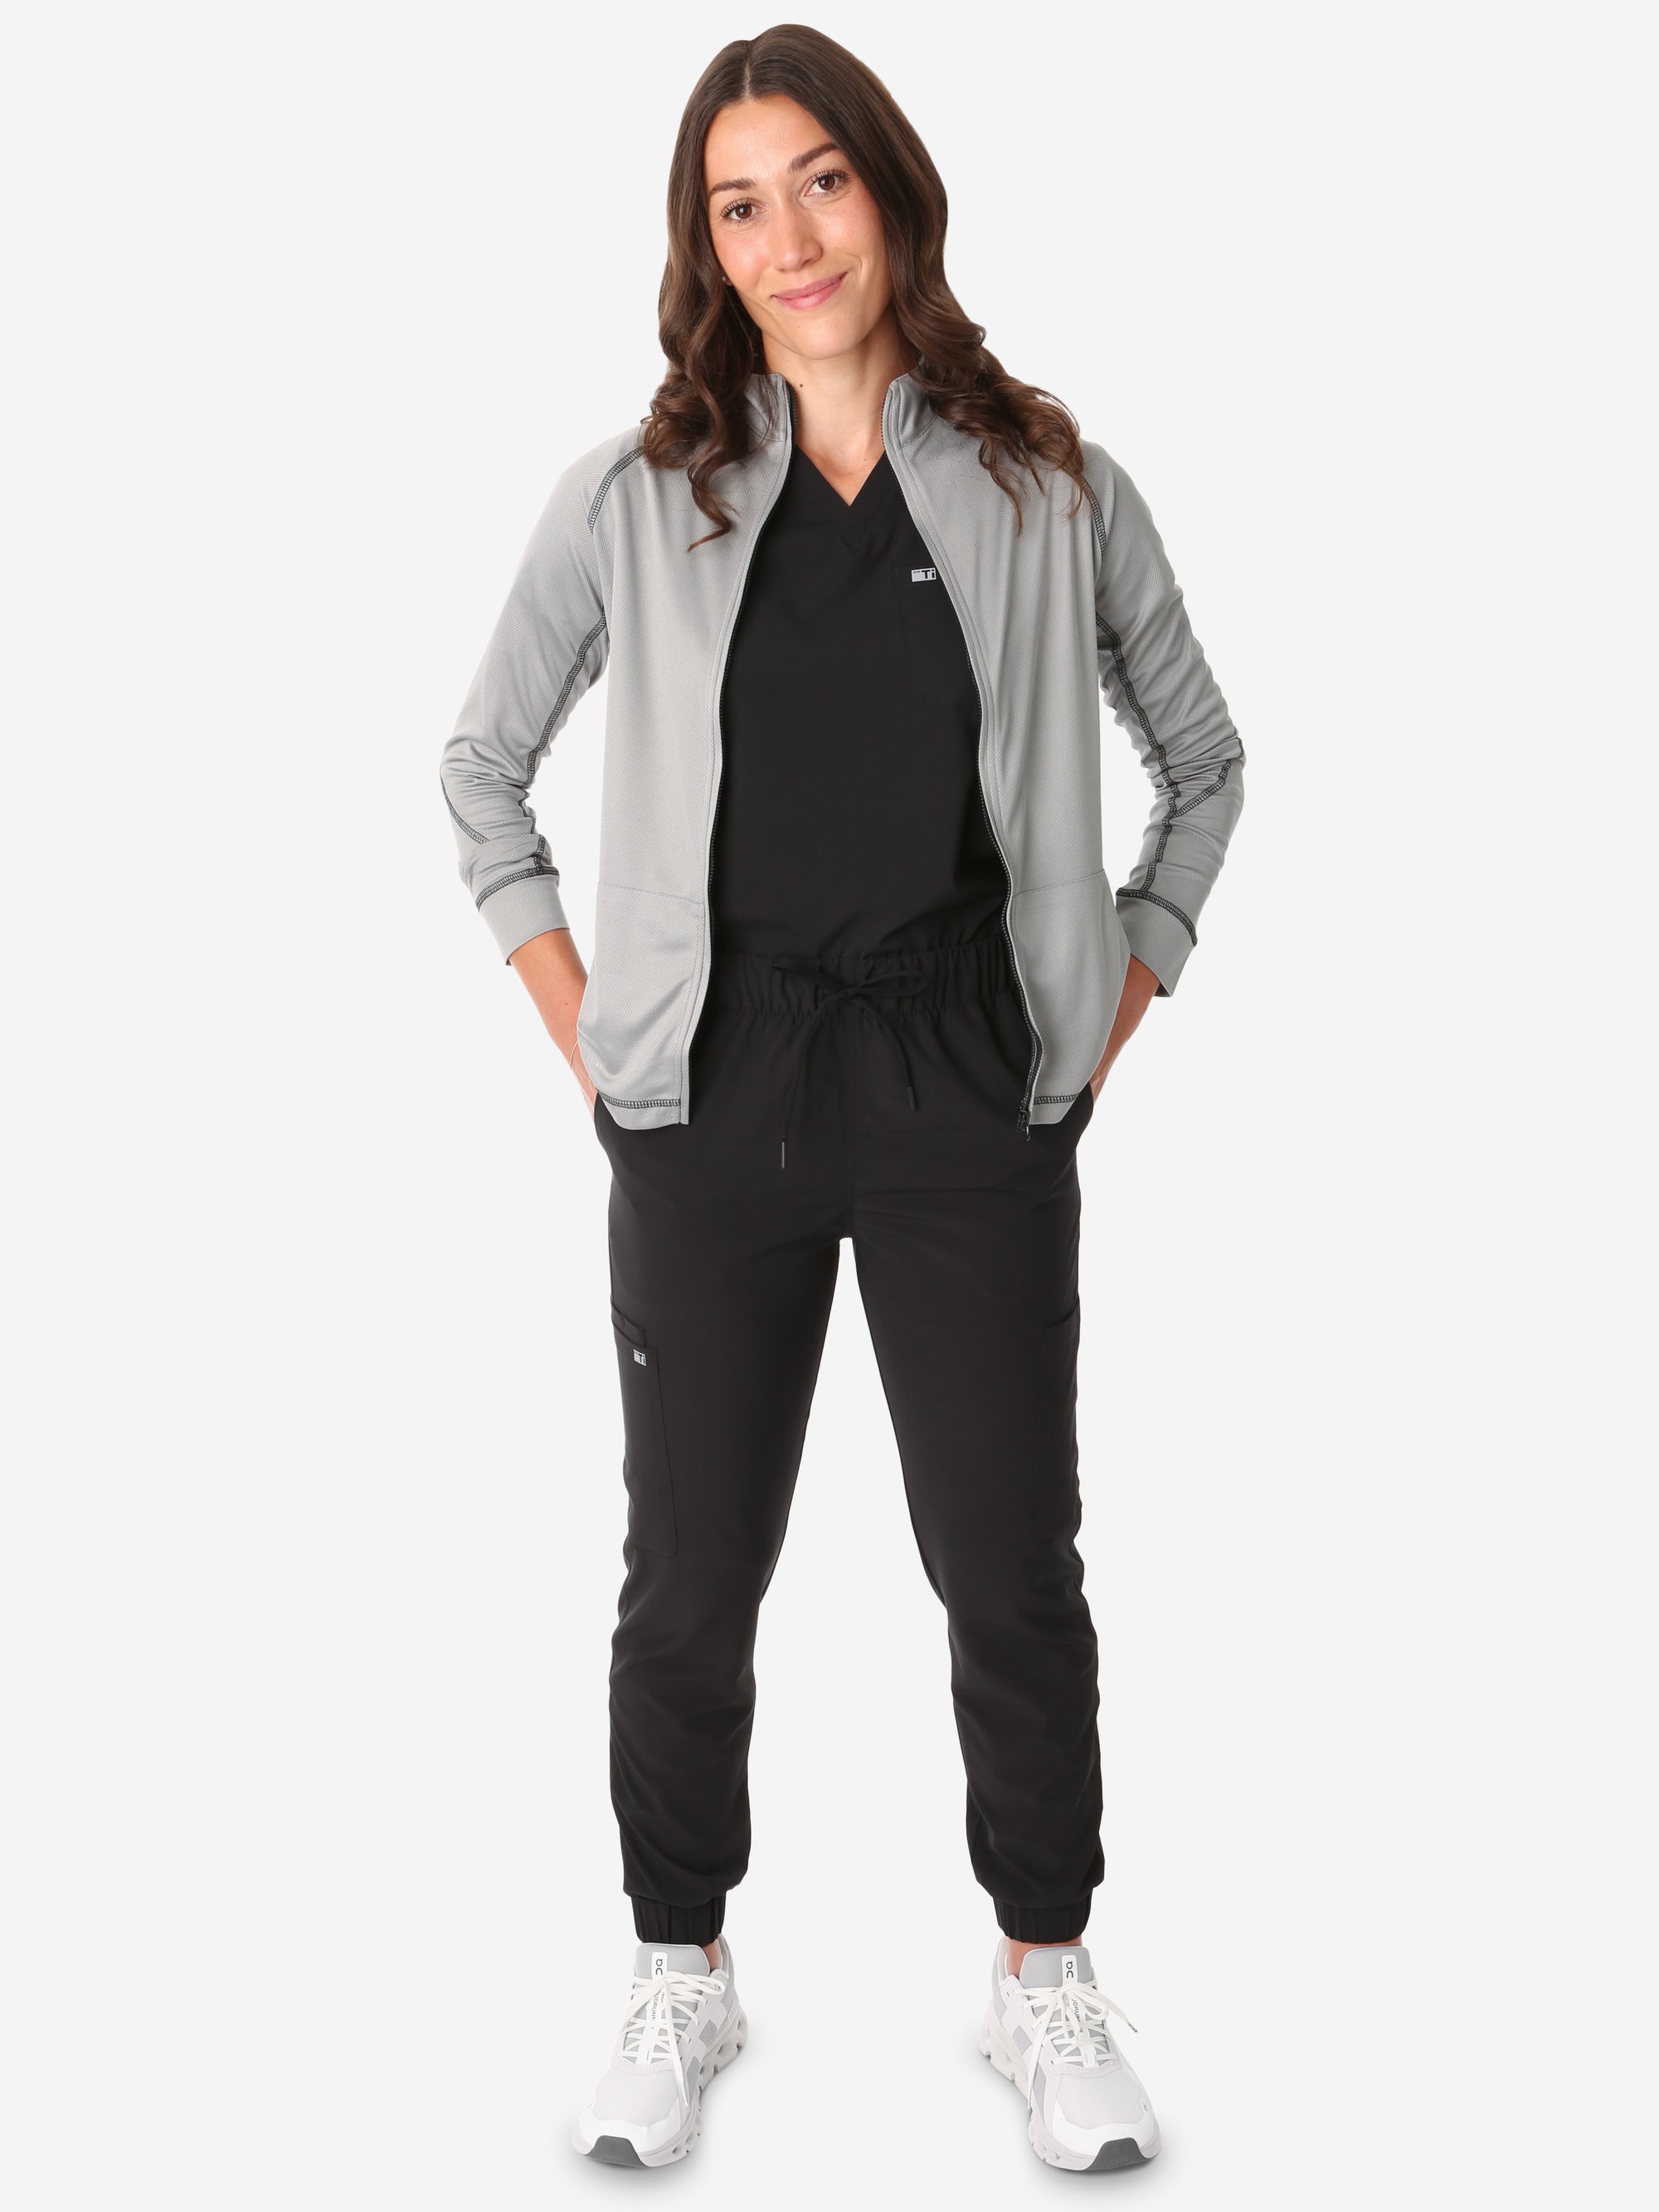 Women&#39;s Mesh Scrub Jacket Unzipped Titanium Gray Front View Full Body Plus Black Stretch Scrubs